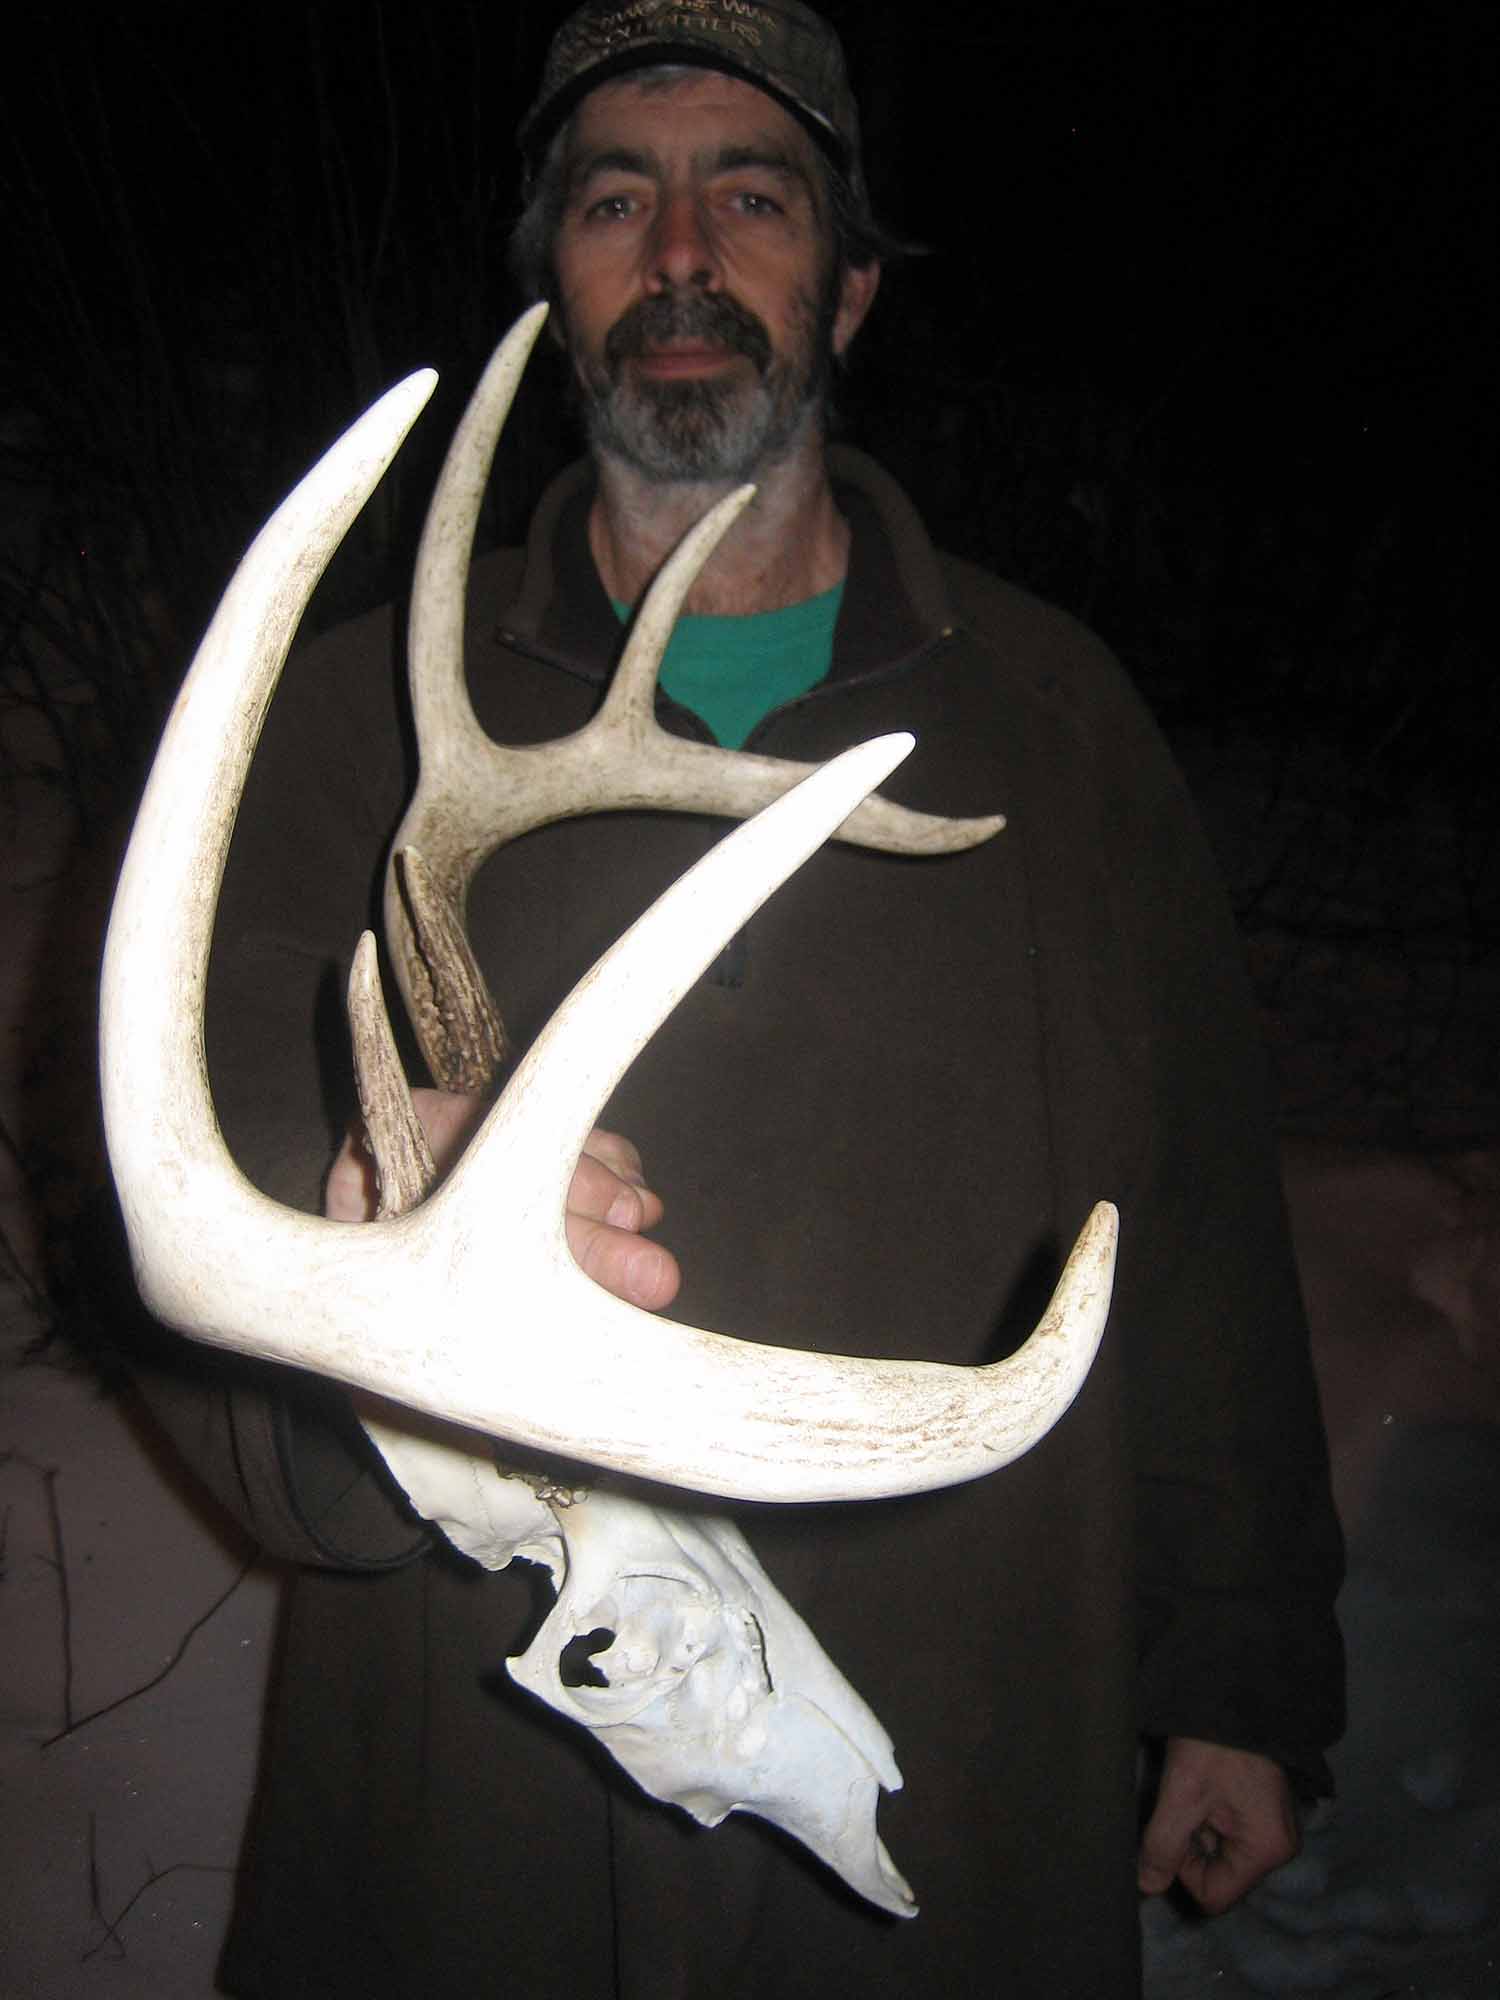 2014-deer-hunt-whitetail2